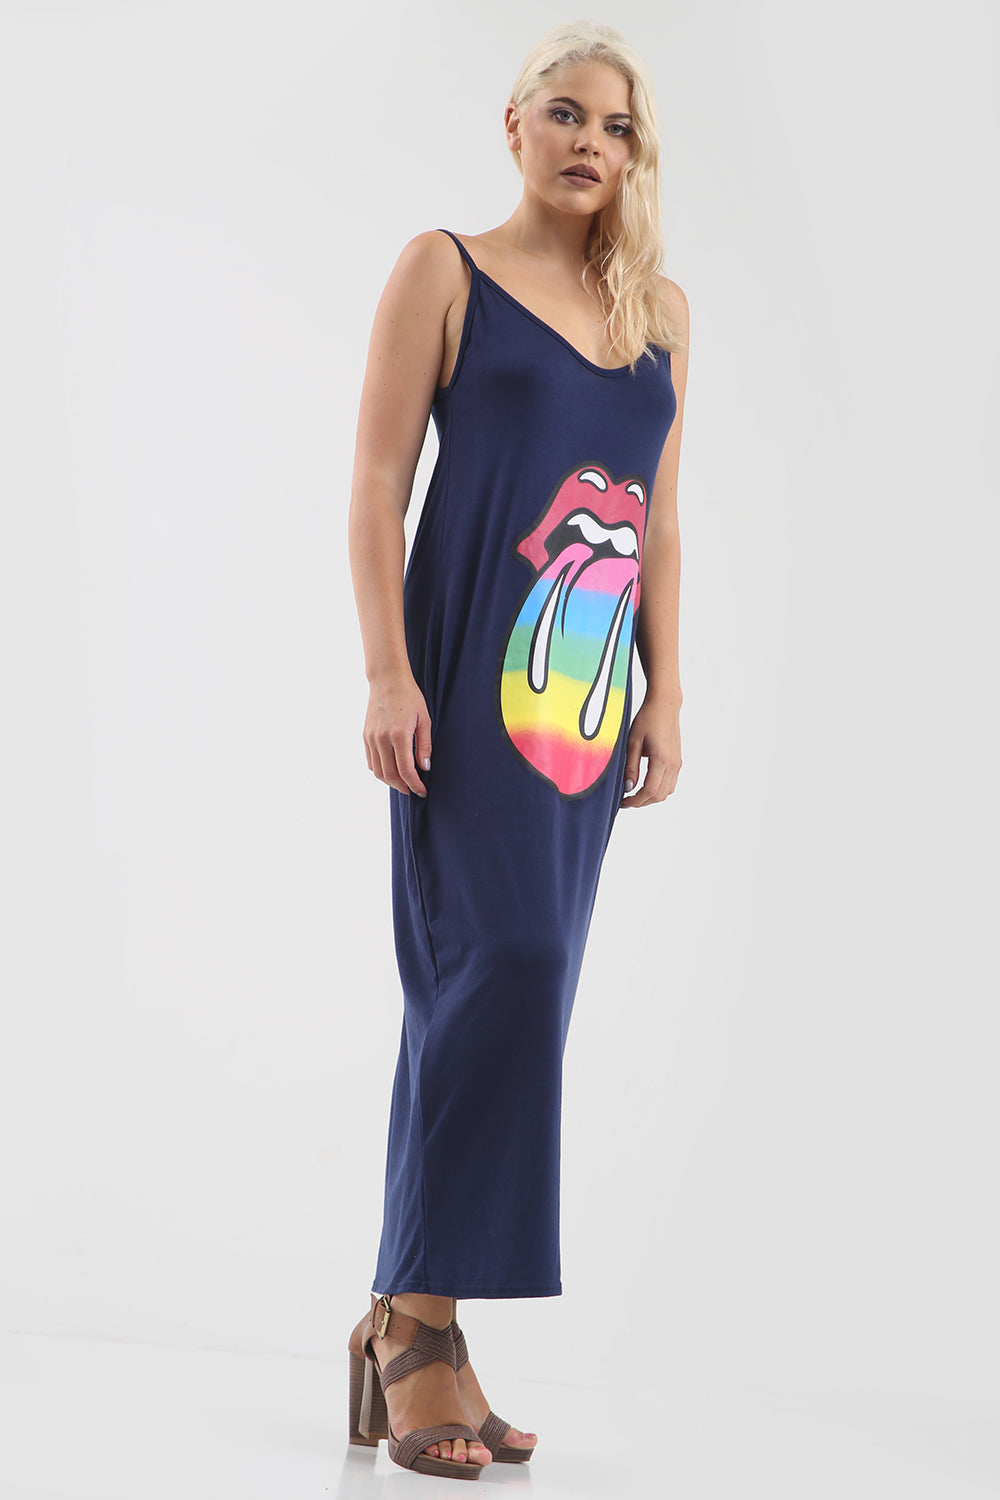 Strappy Grey Rainbow Graphic Print Maxi Dress - bejealous-com